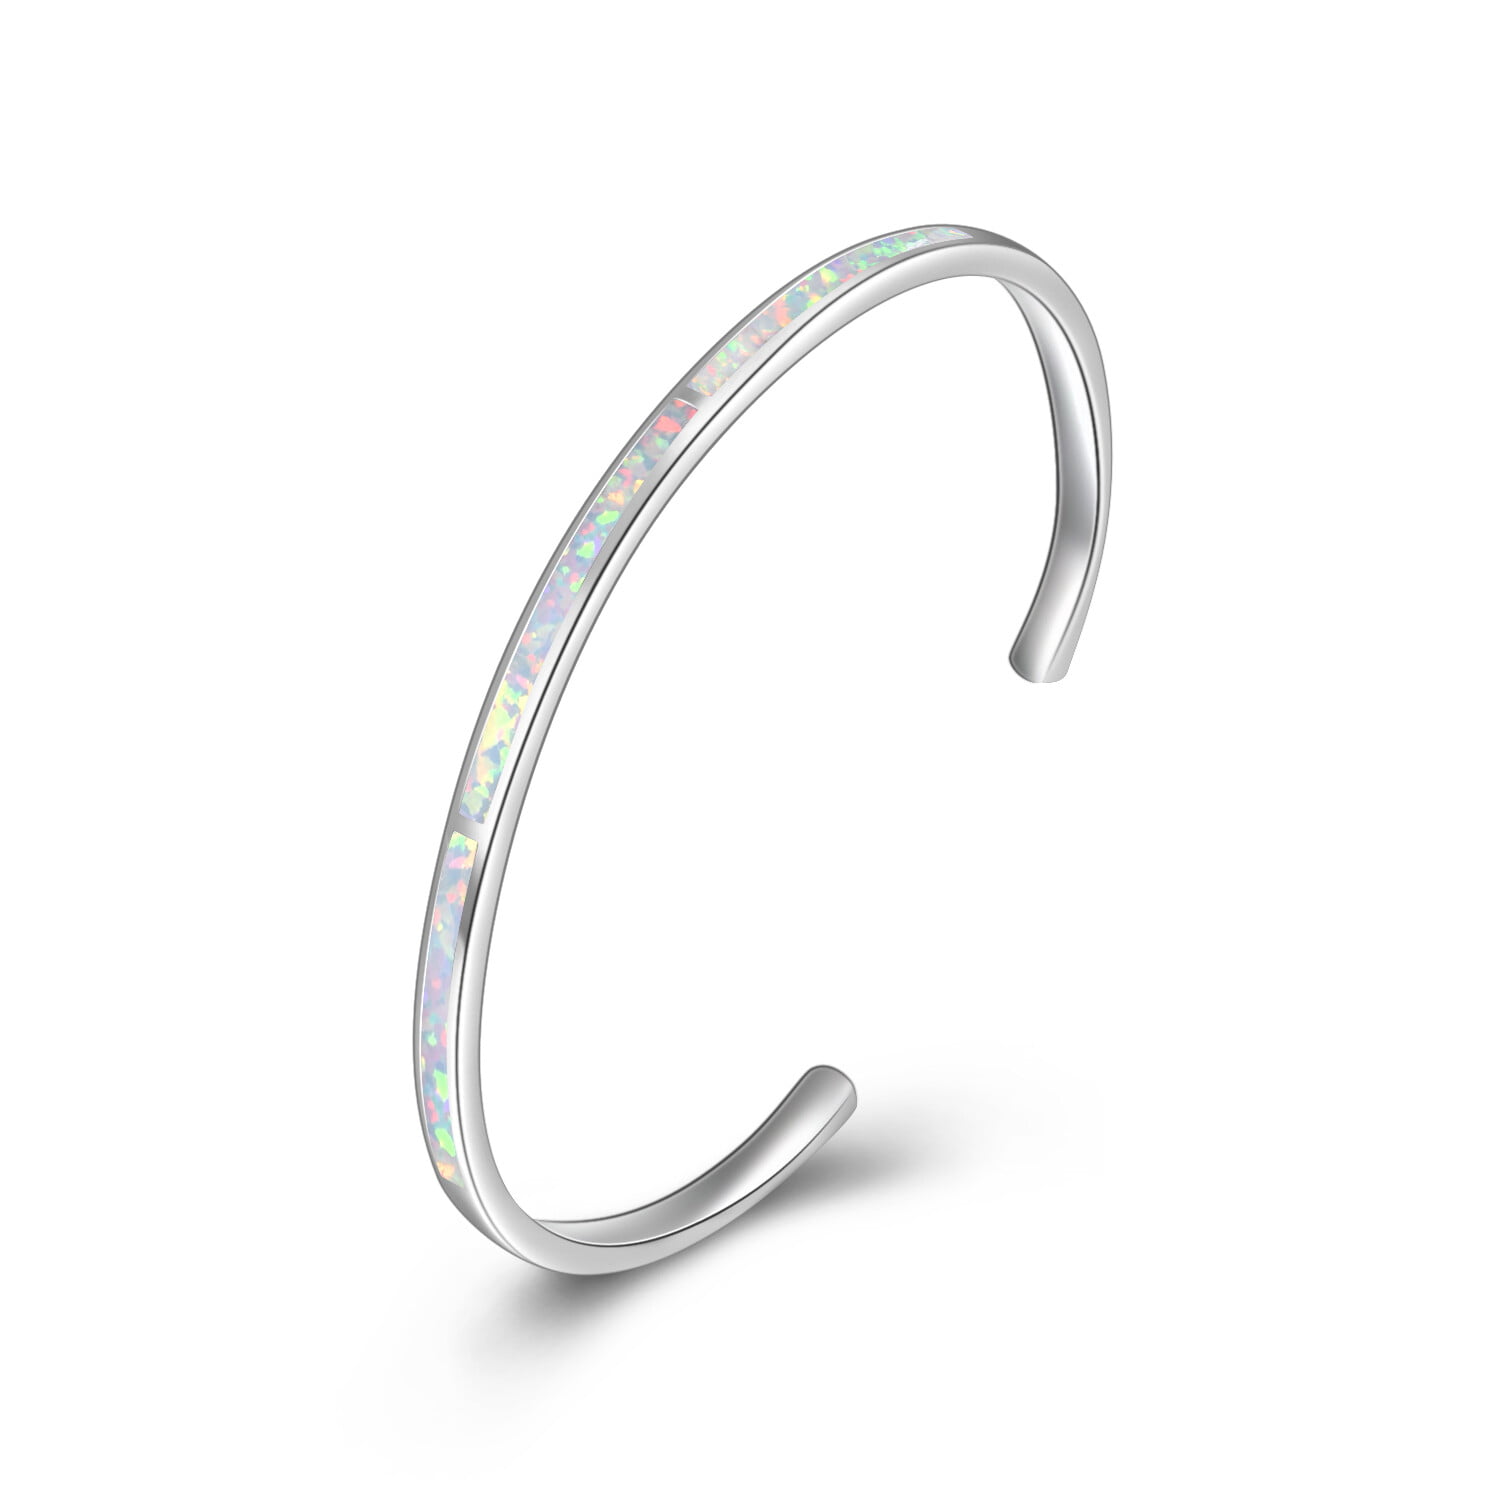 Handmade Jewelry Gift Jewelry White Opalite Sterling Silver Overlay Bangle/Bracelet Free Size 